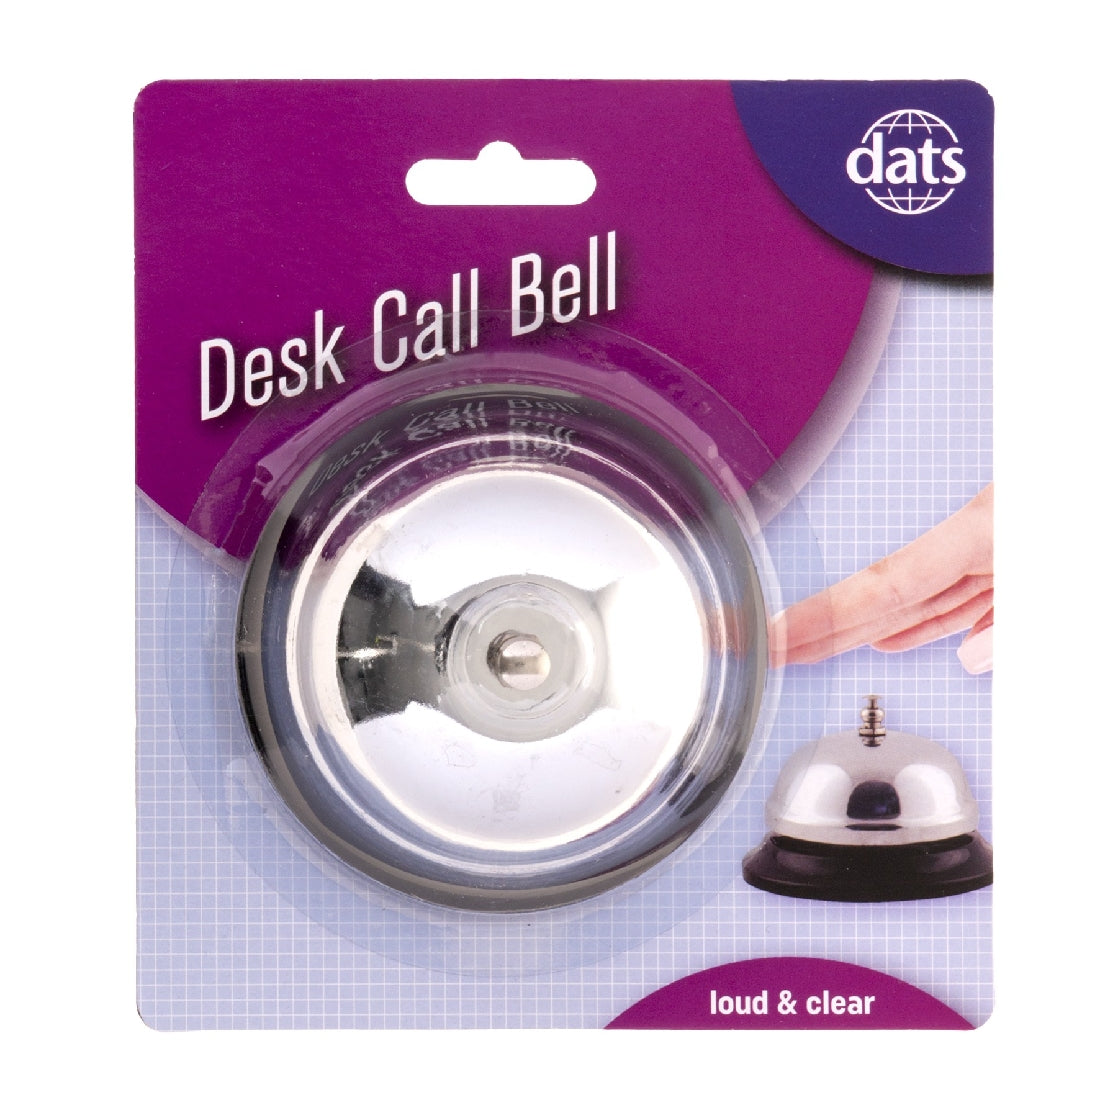 DESK CALL BELL